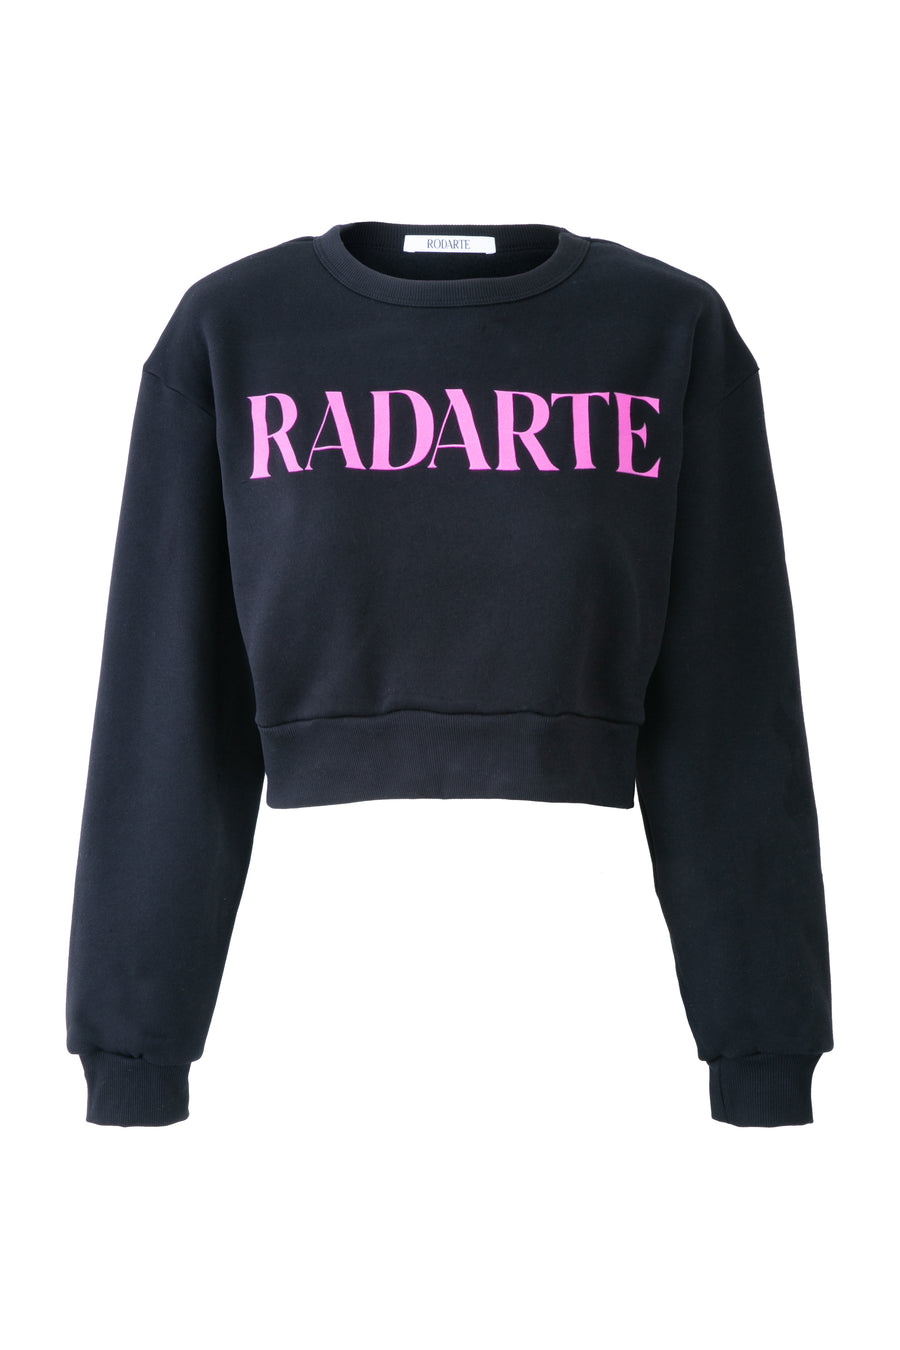 Radarte Cropped Sweatshirt